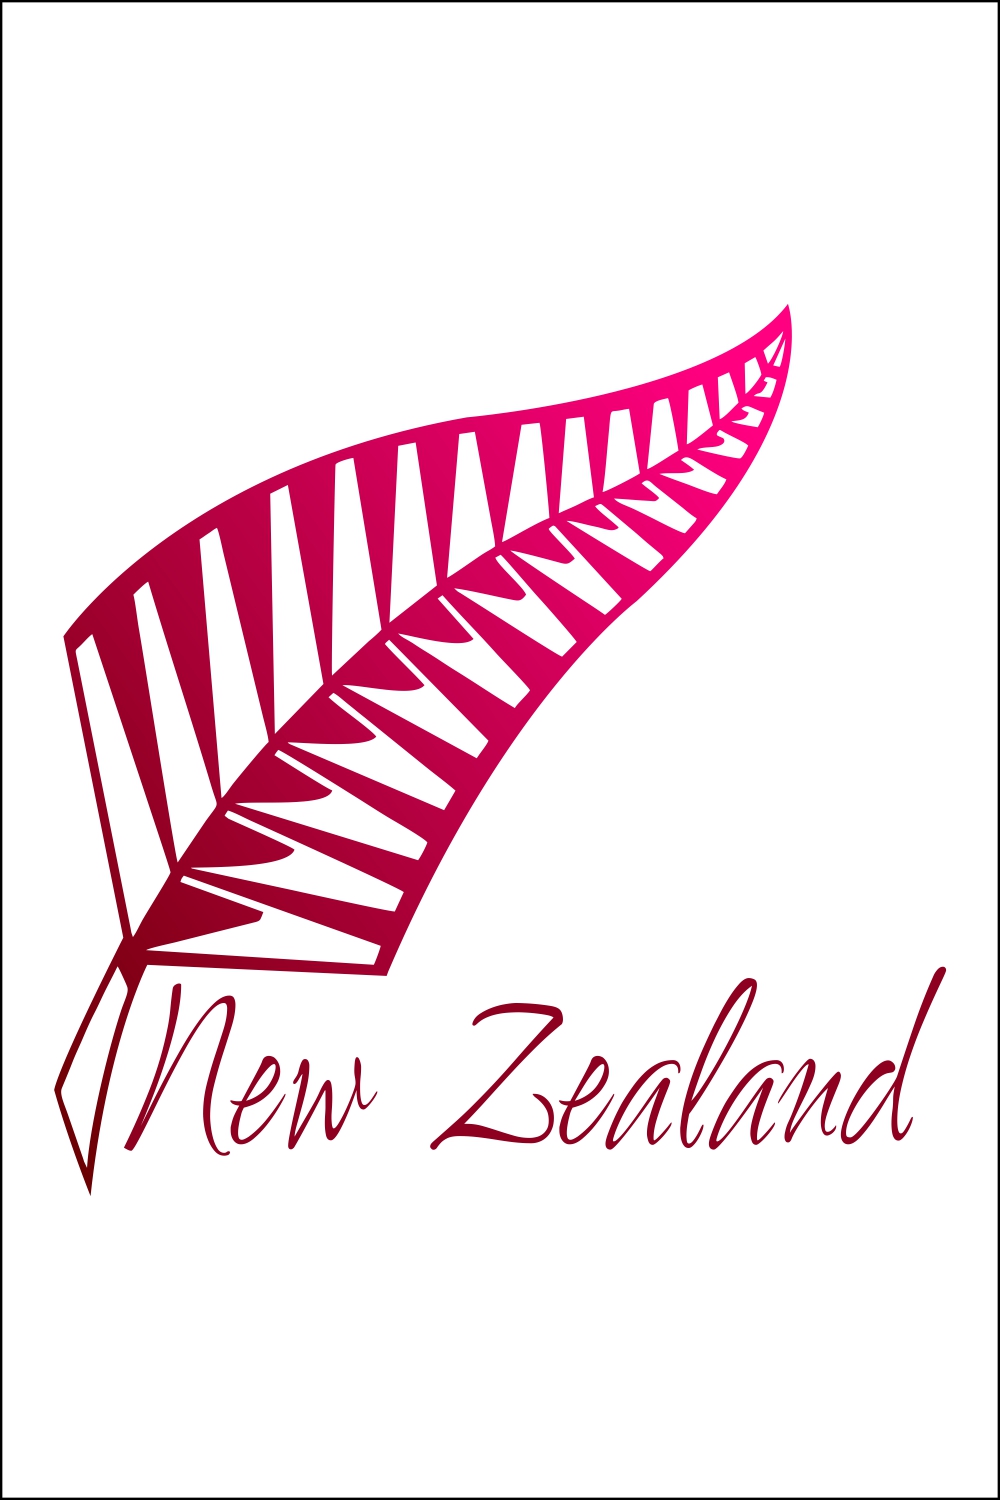 new Zealand logo pinterest preview image.